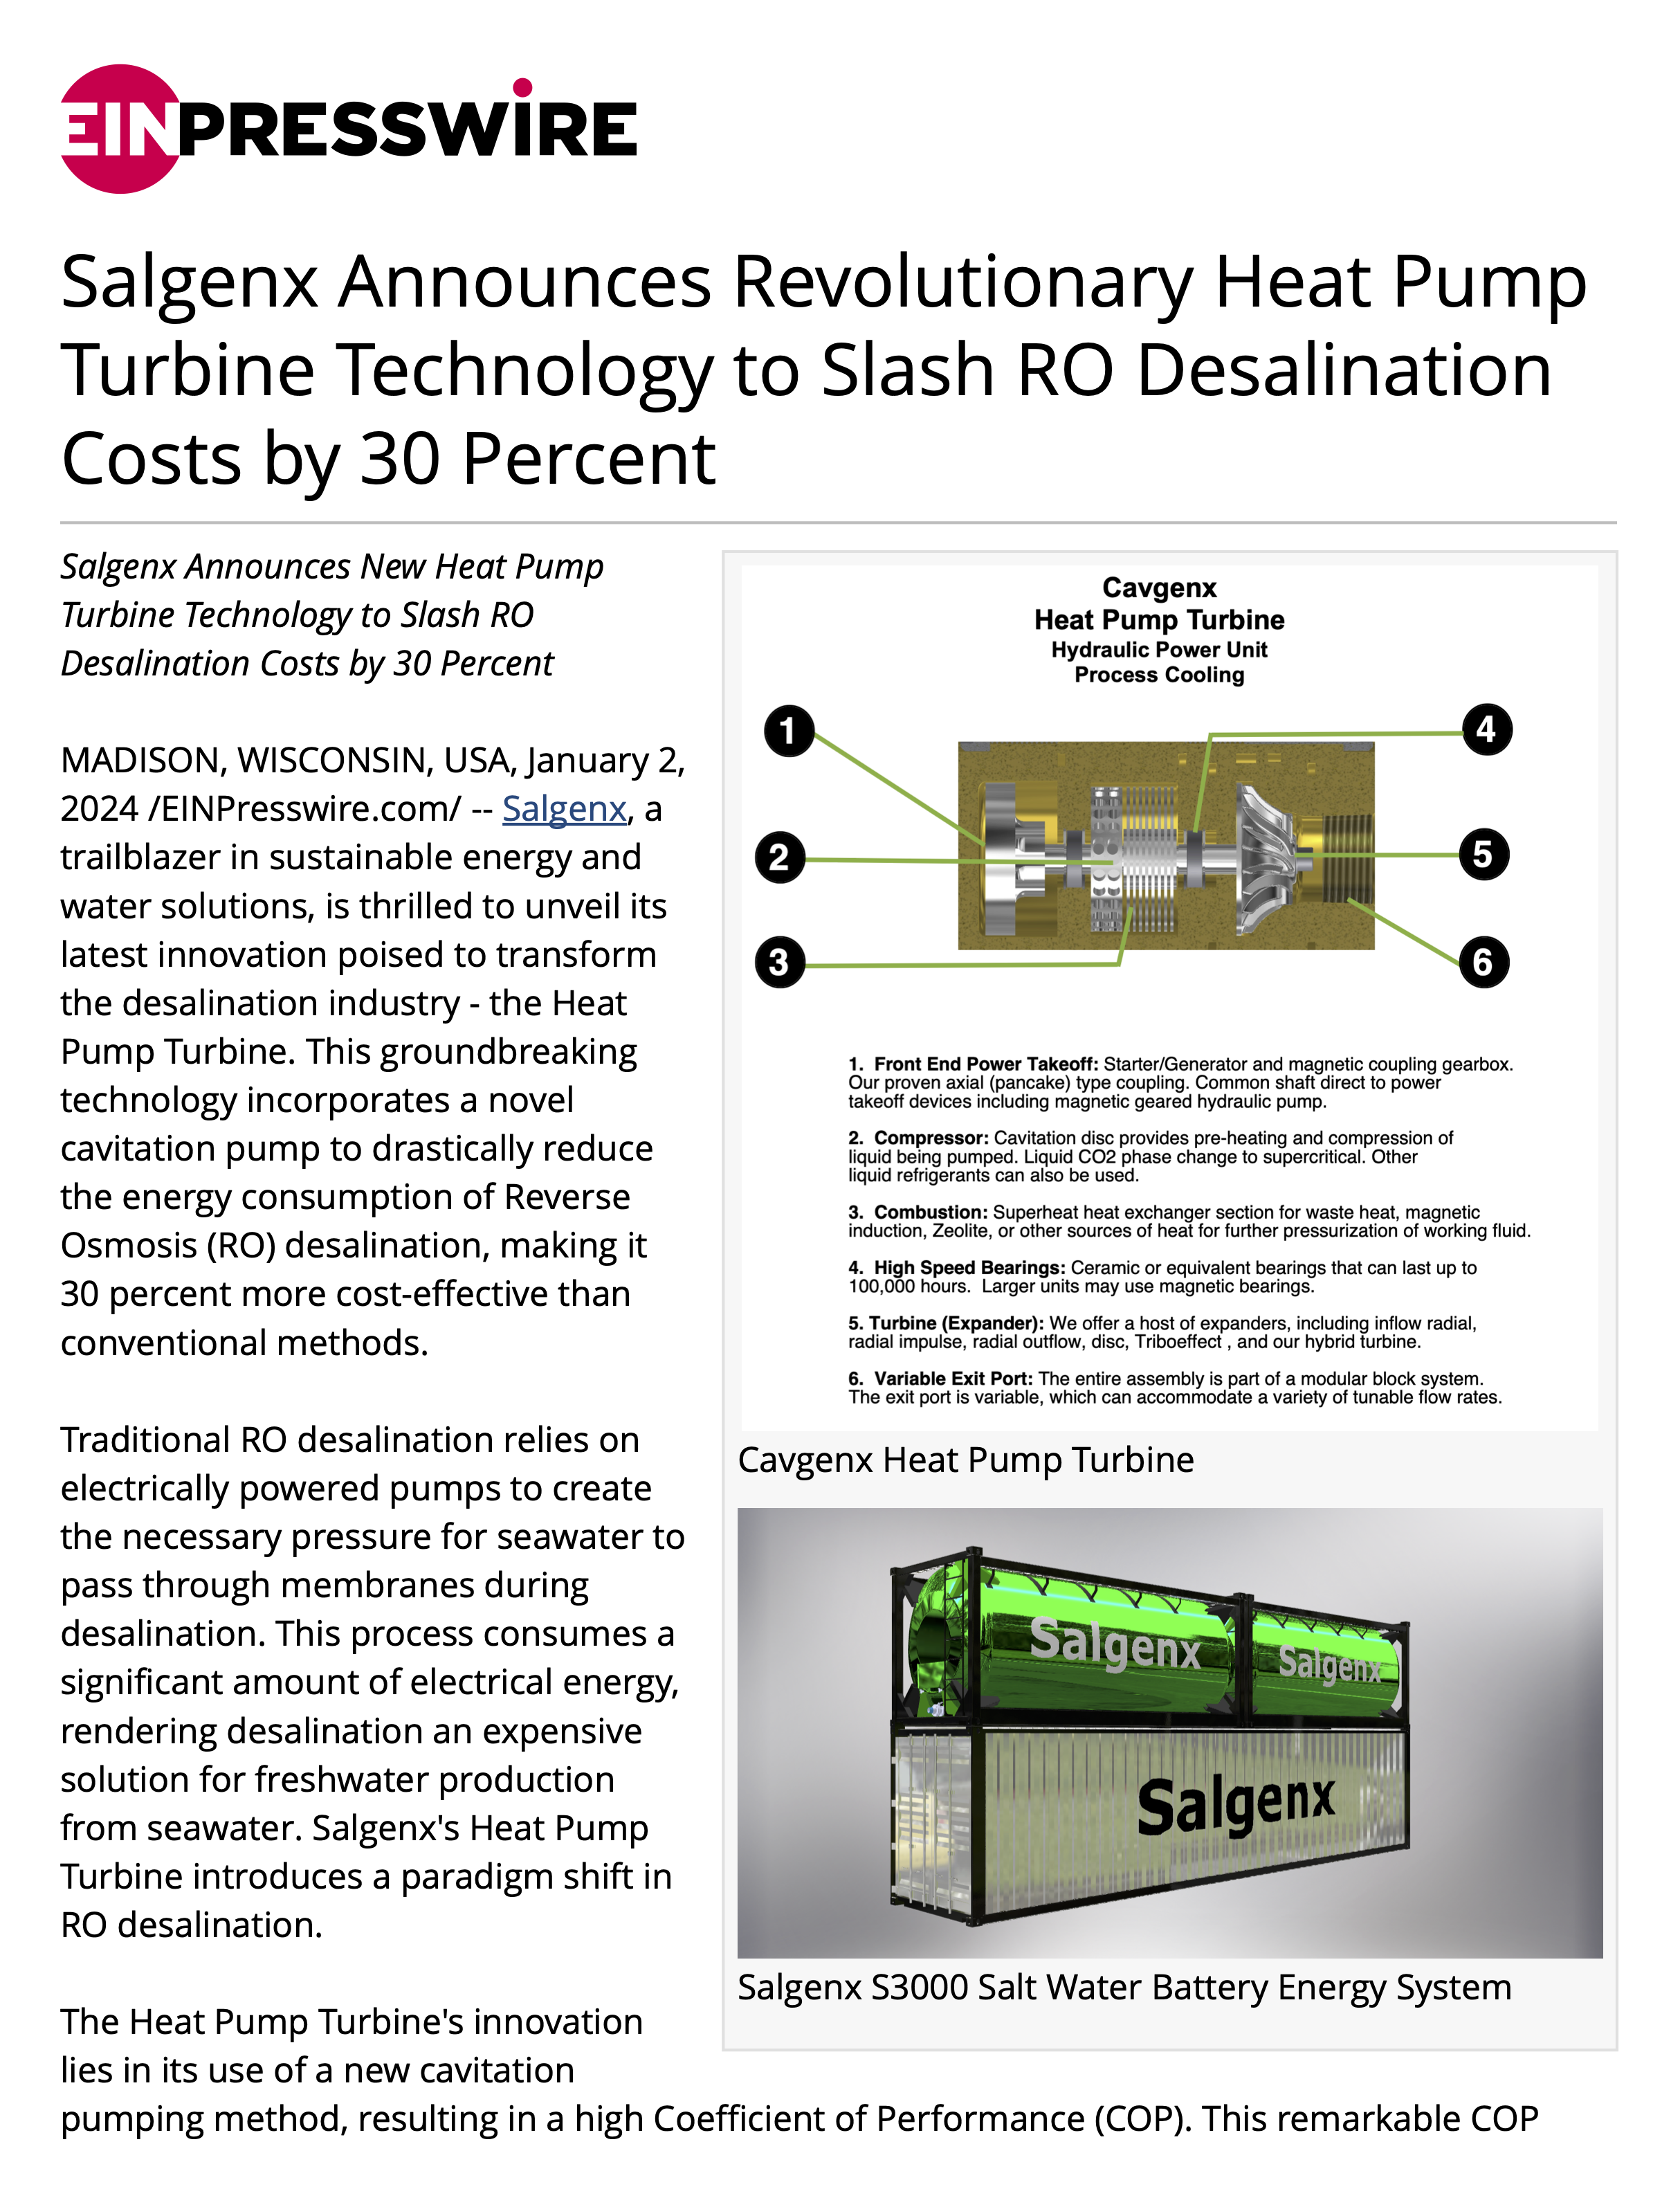 Salgenx Announces Revolutionary Heat Pump Turbine Technology to Slash RO Desalination Costs by 30 Percent